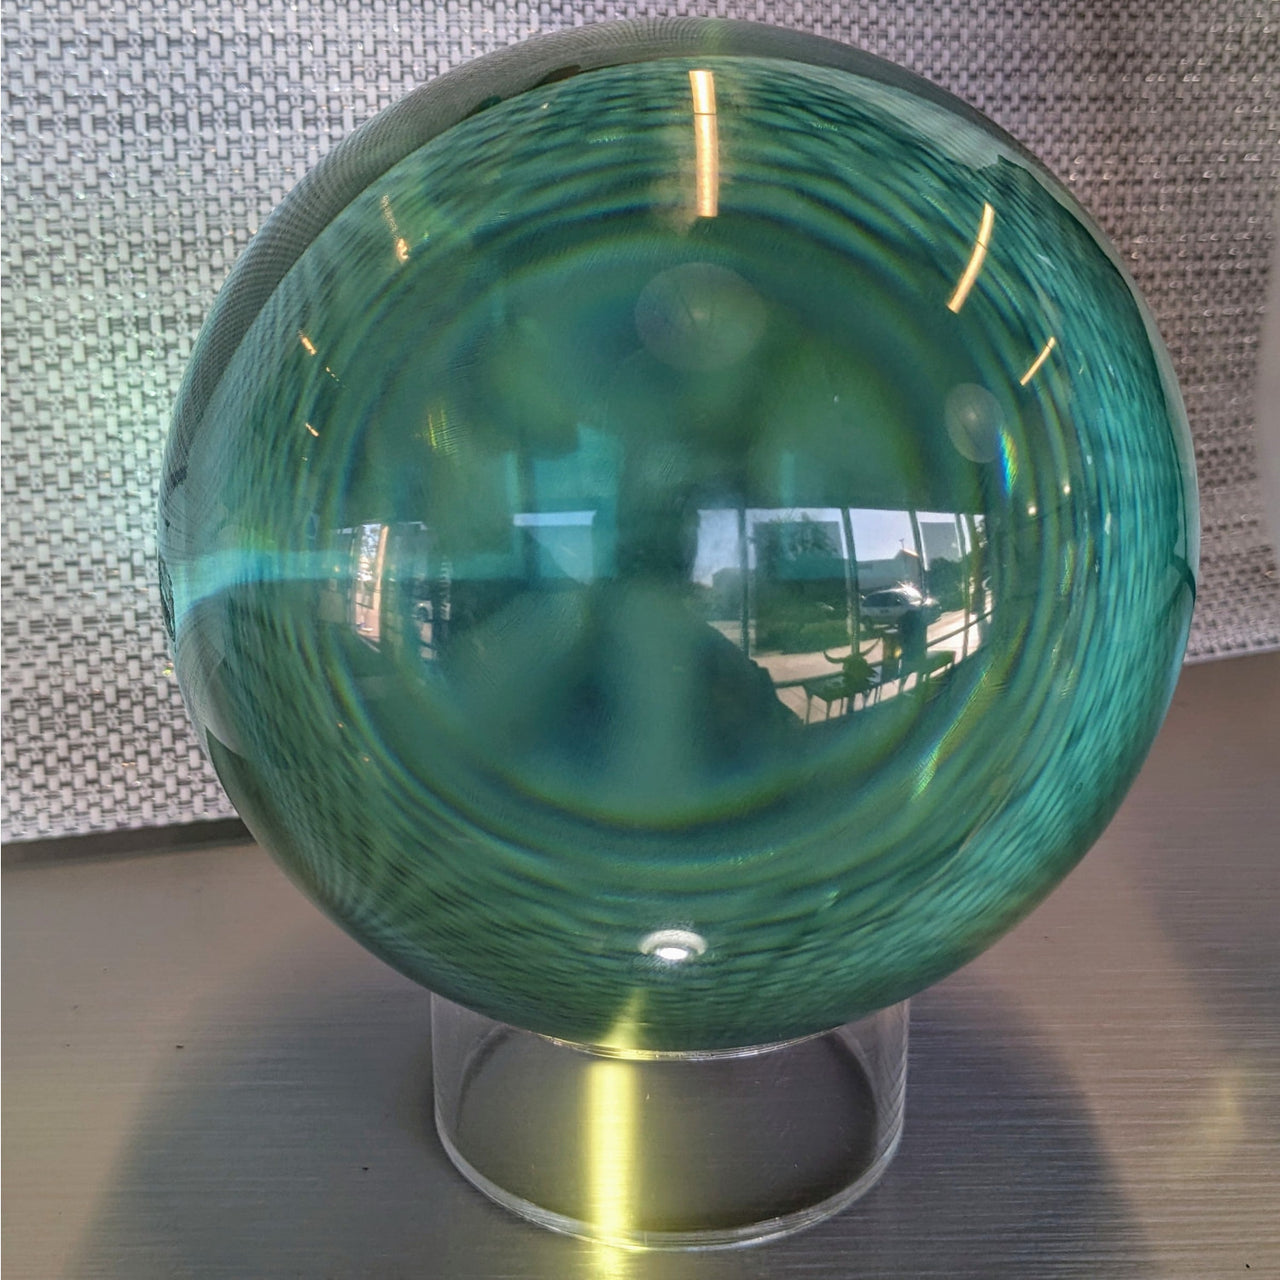 Aqua Obsidian 5’ Sphere #LV5427 - stunning green glass ball on metal stand, aqua blue accent